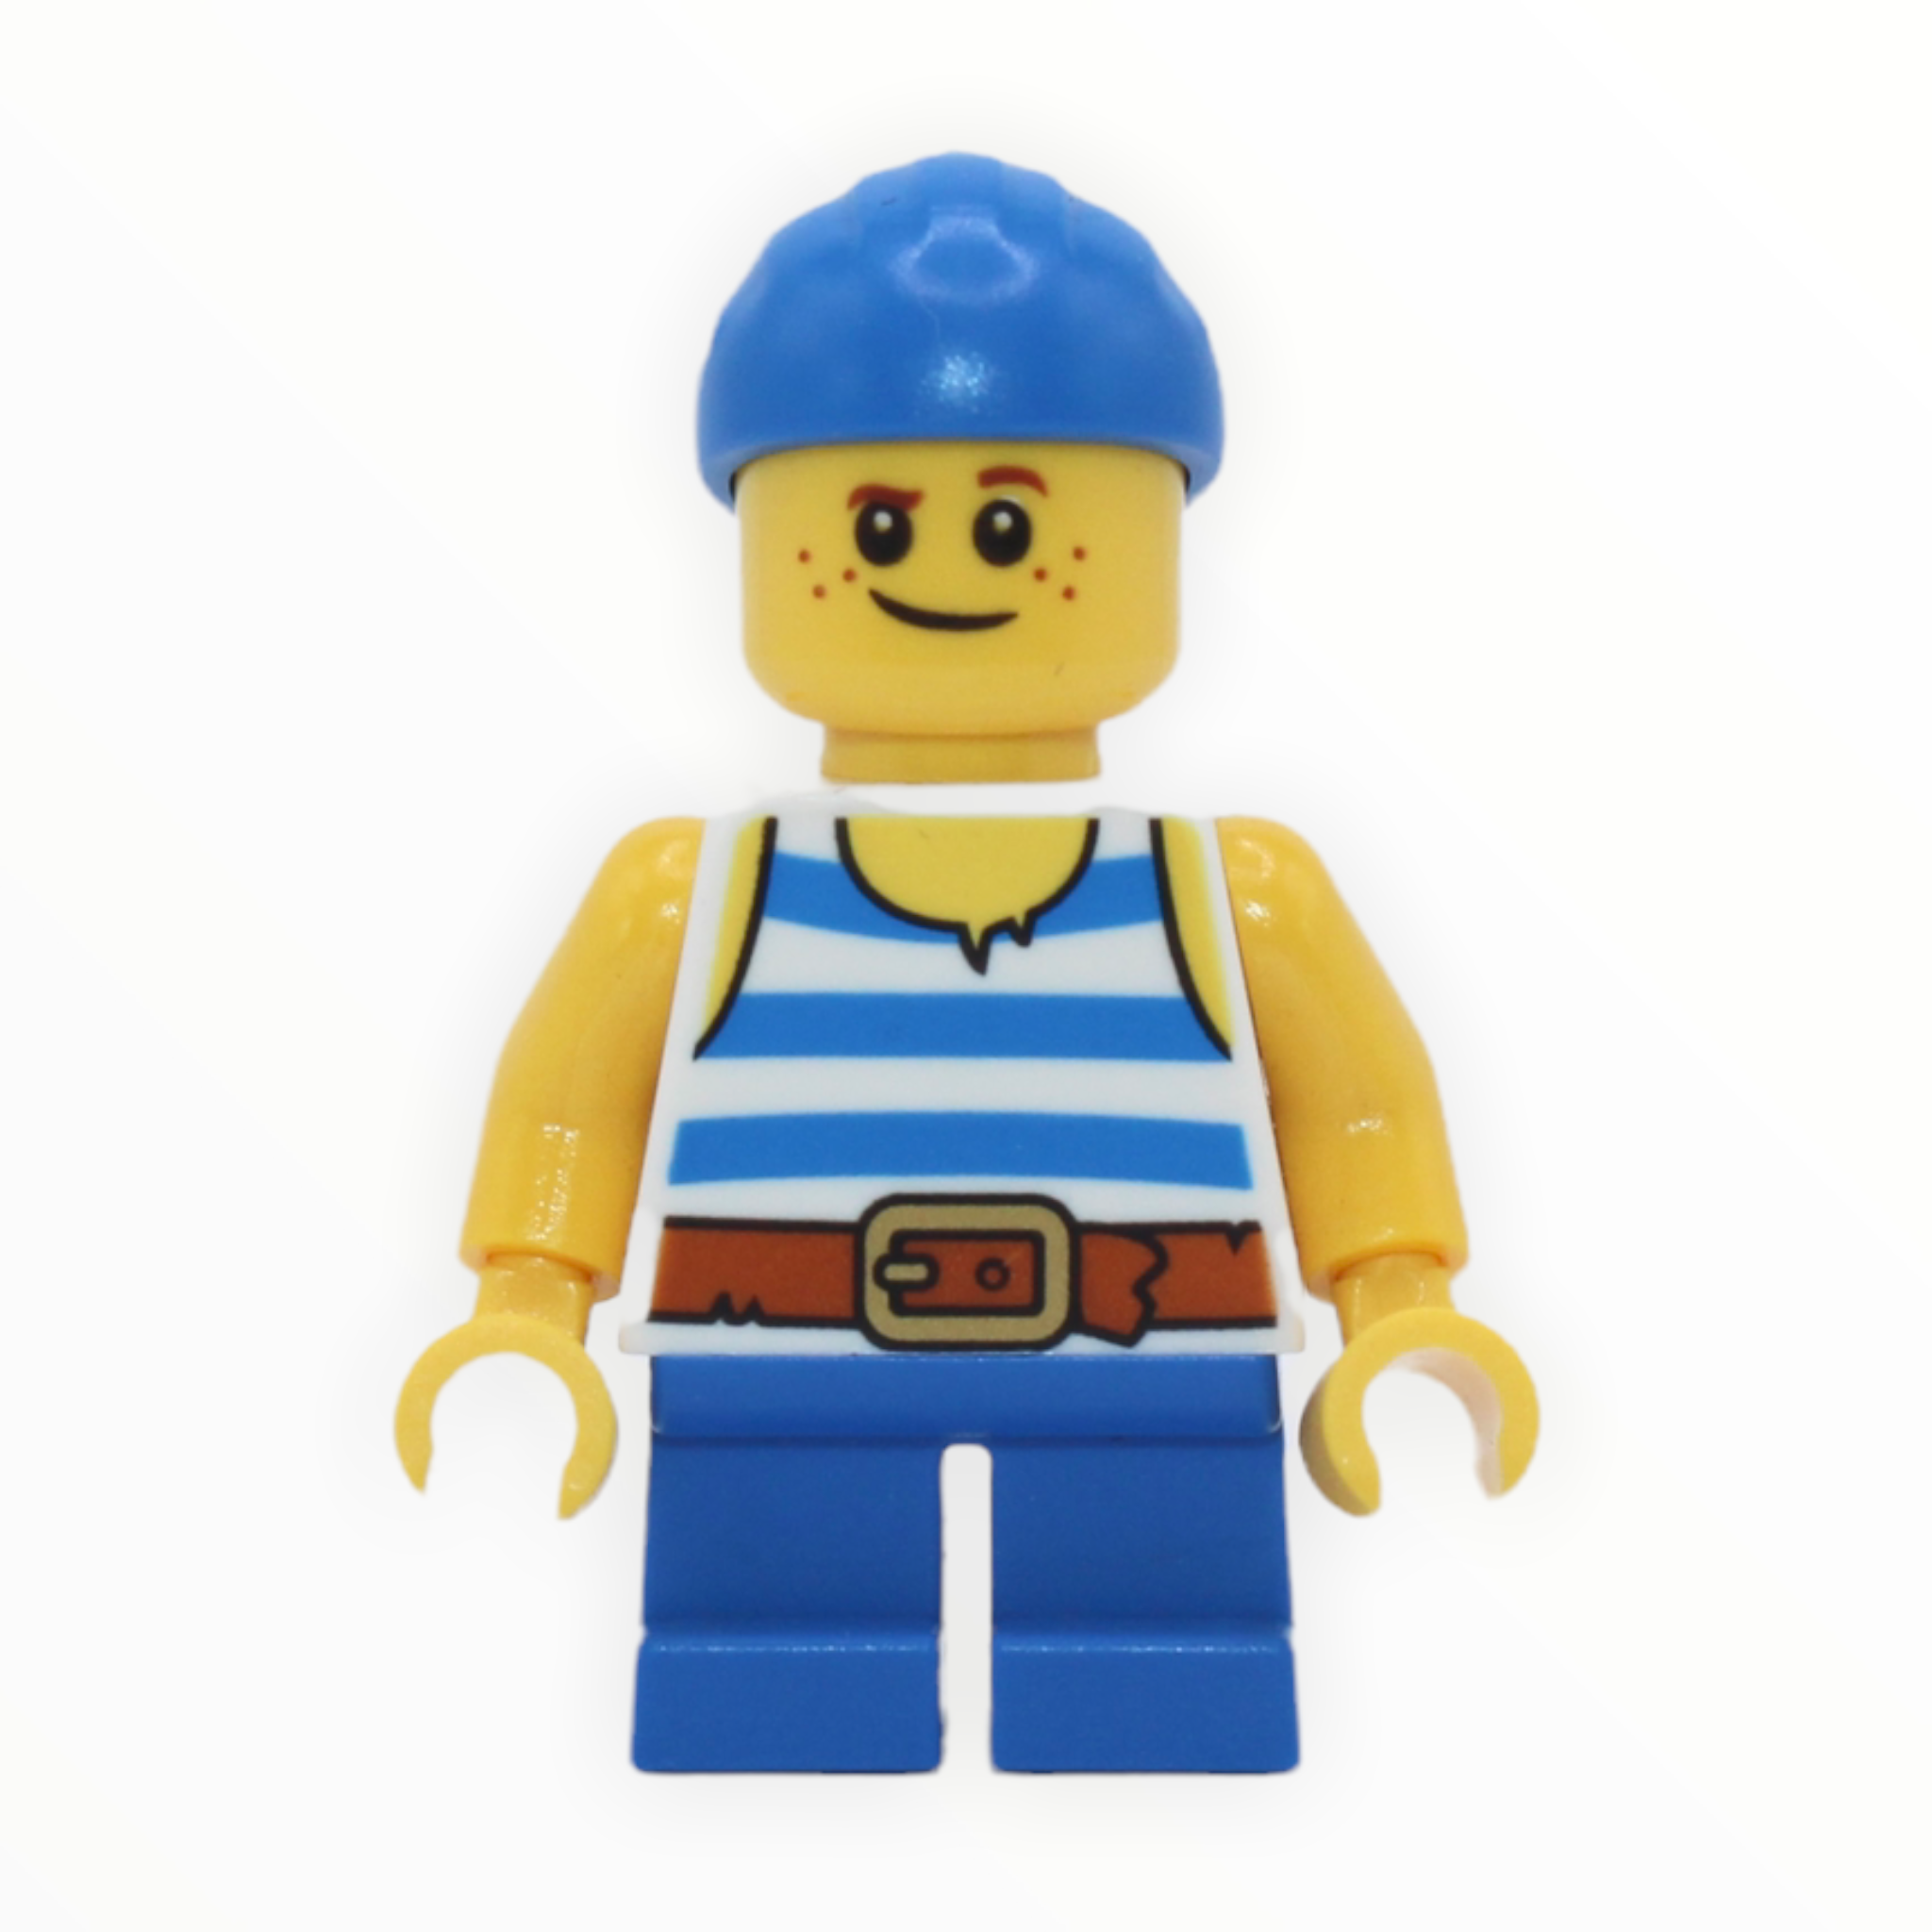 Jack “Dark Shark” Doubloons (LEGO Ideas)